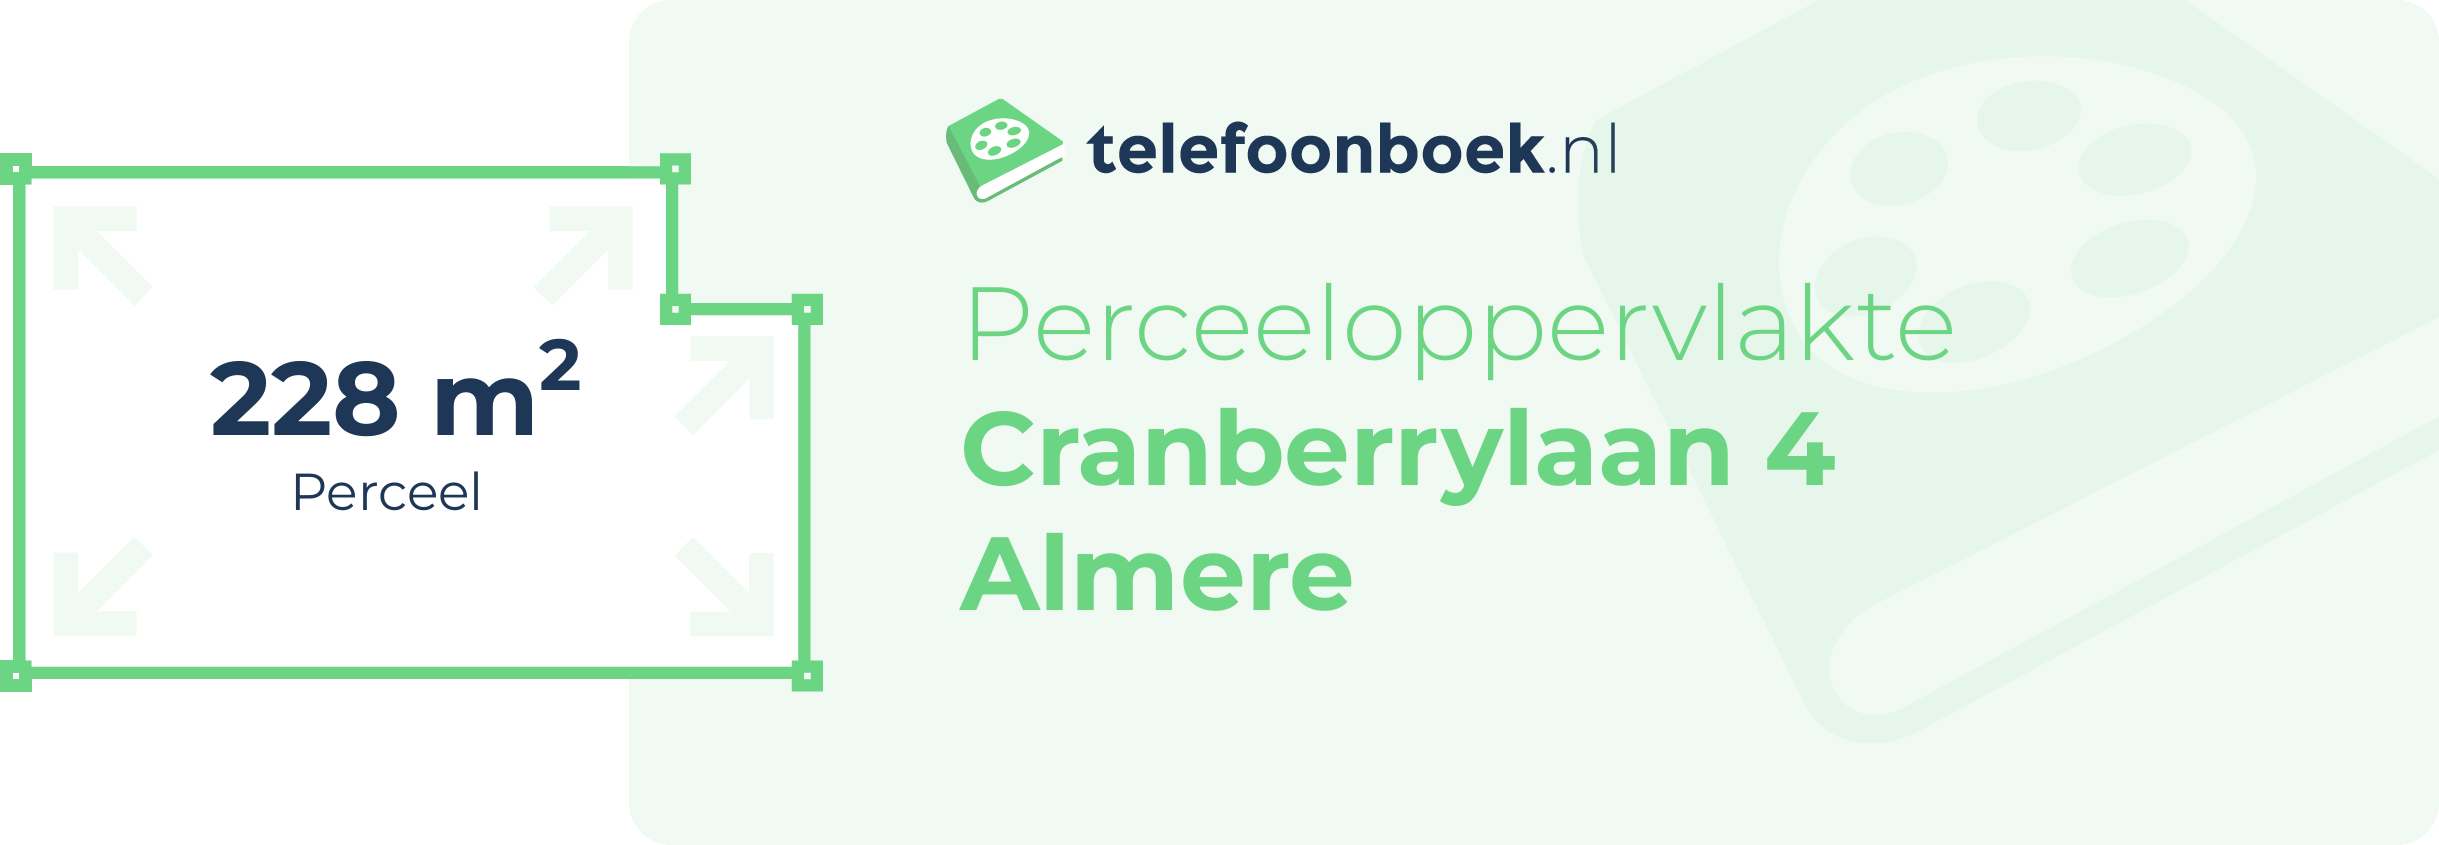 Perceeloppervlakte Cranberrylaan 4 Almere